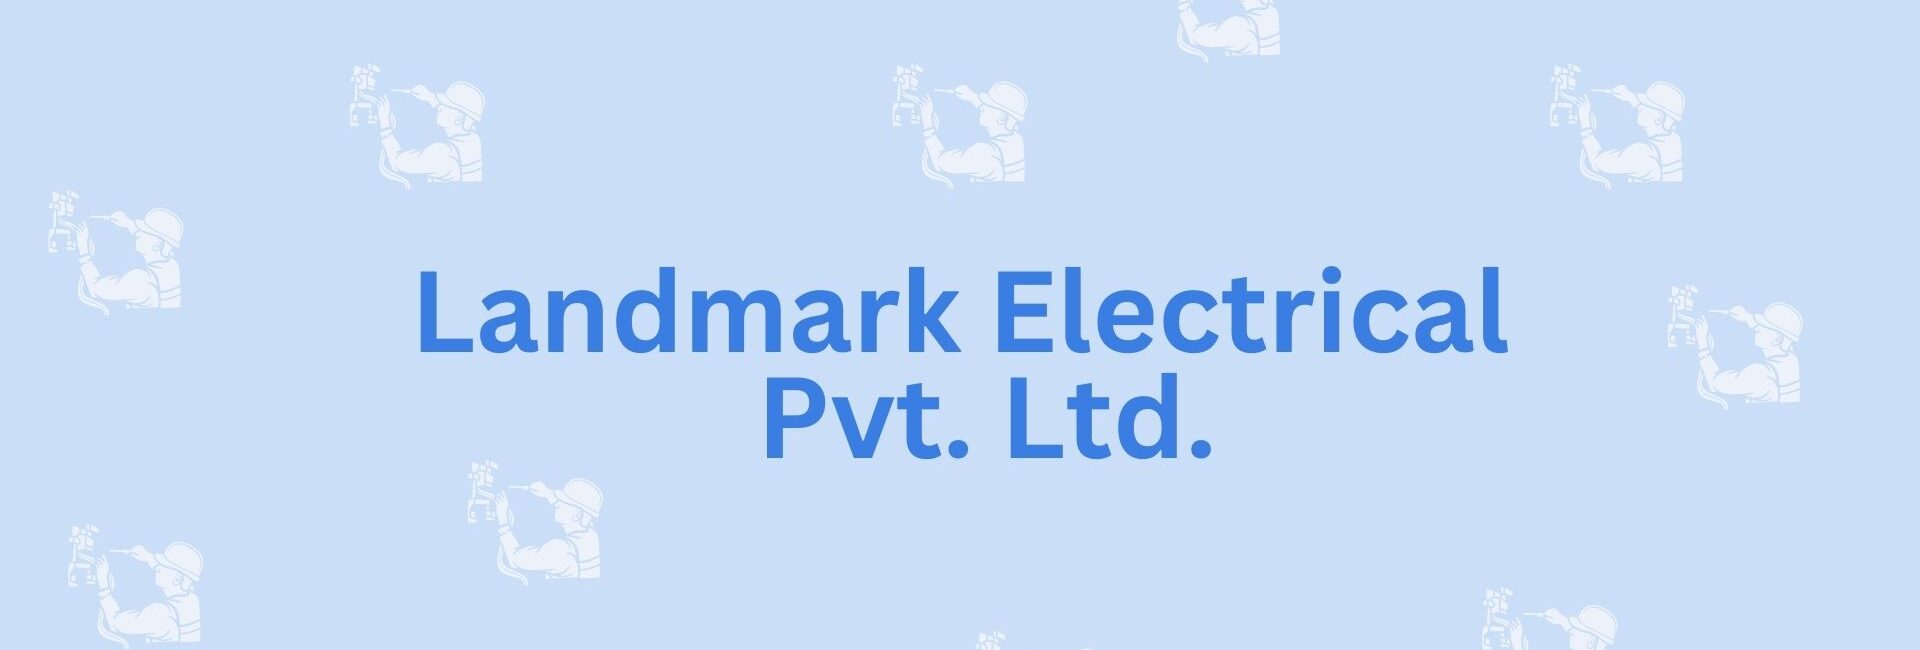 Landmark Electrical Pvt Ltd- Electrician In Noida